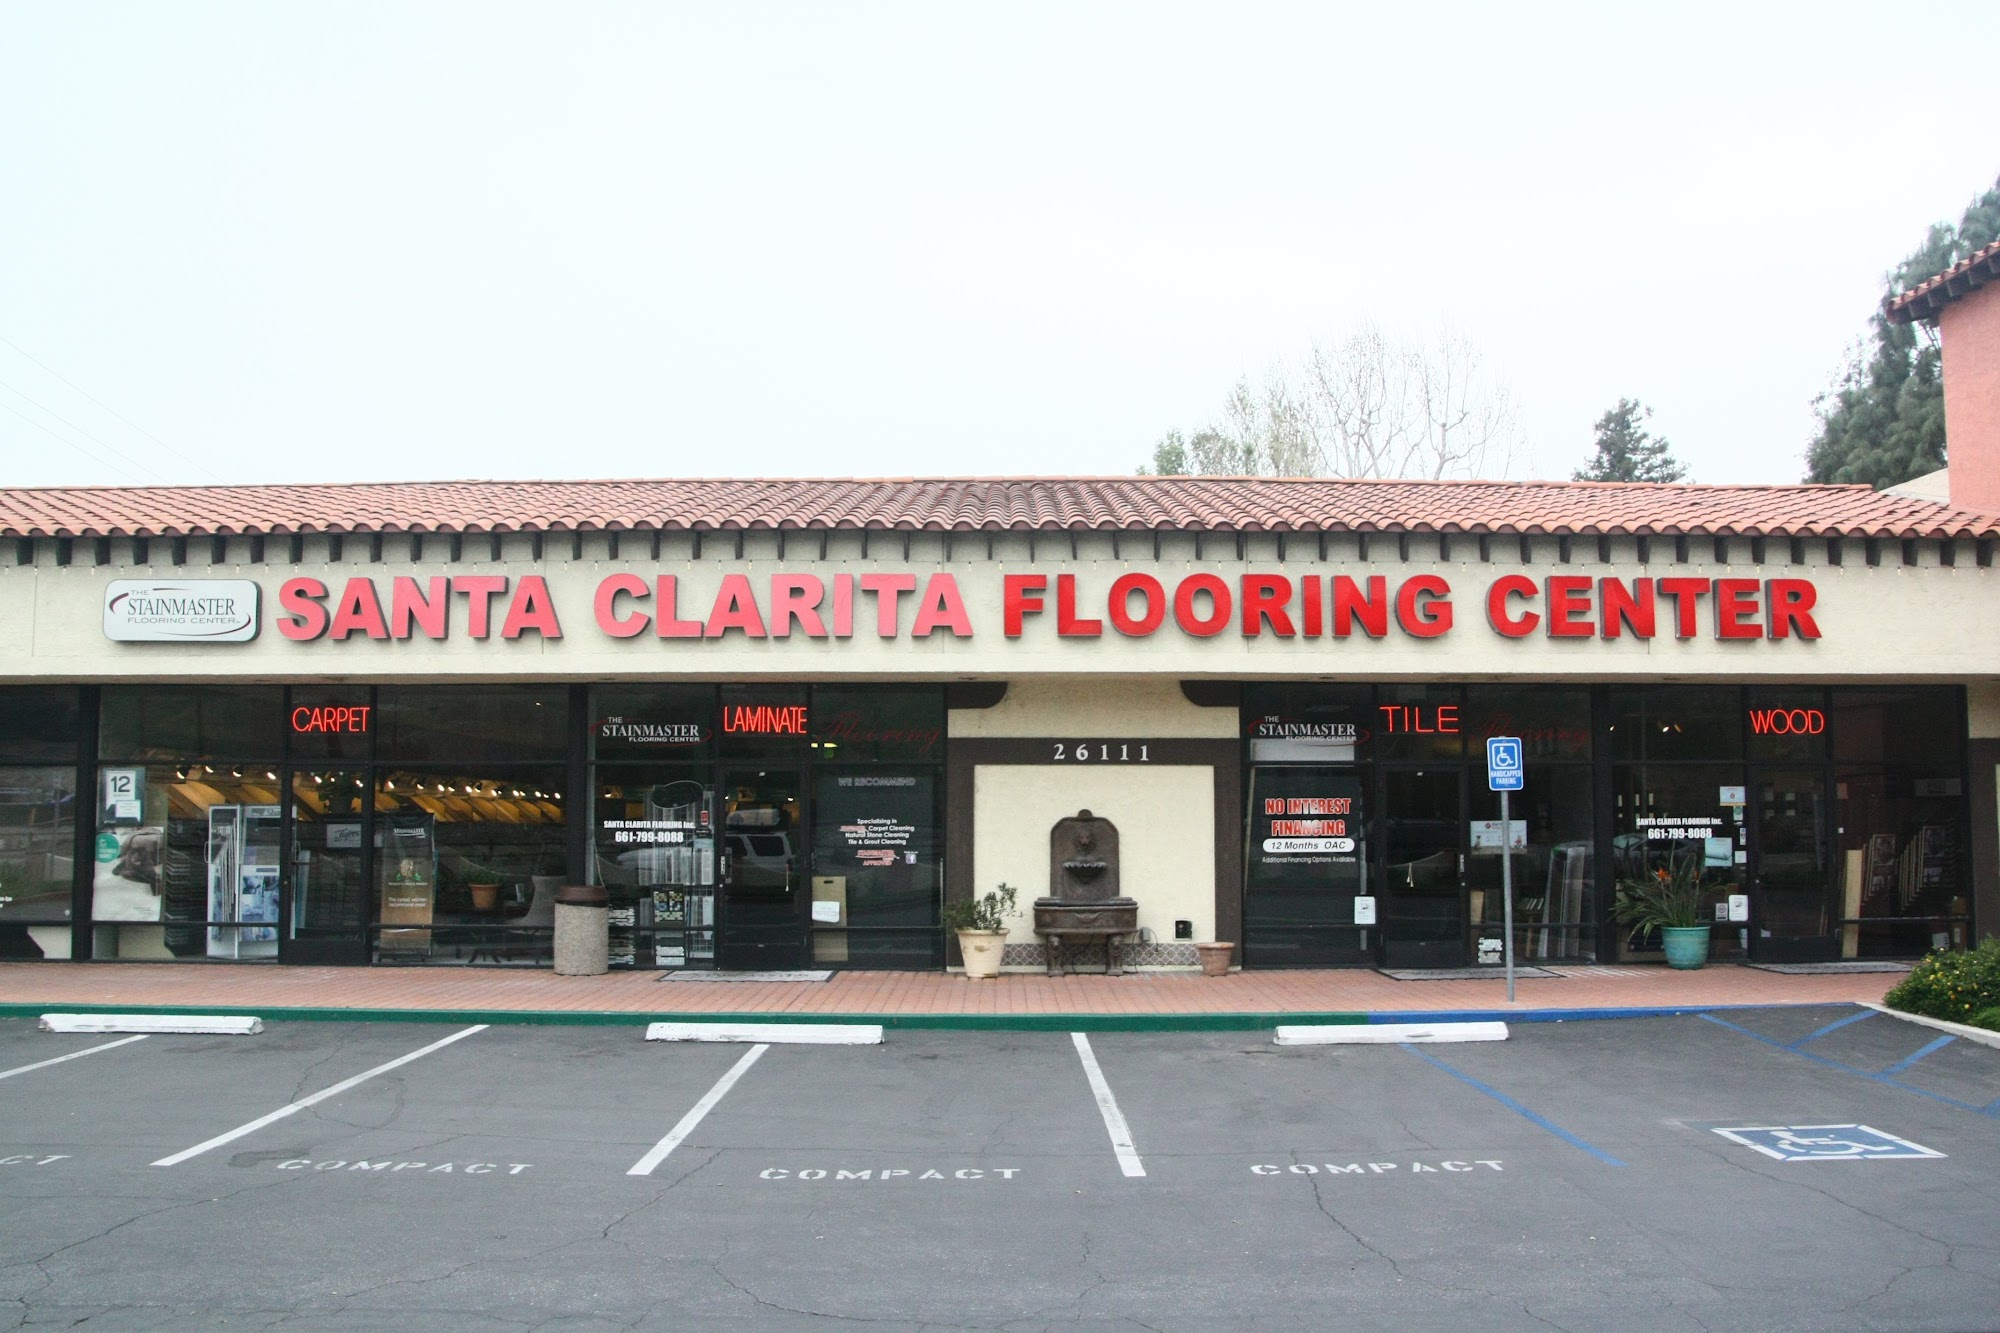 Santa Clarita Flooring Center